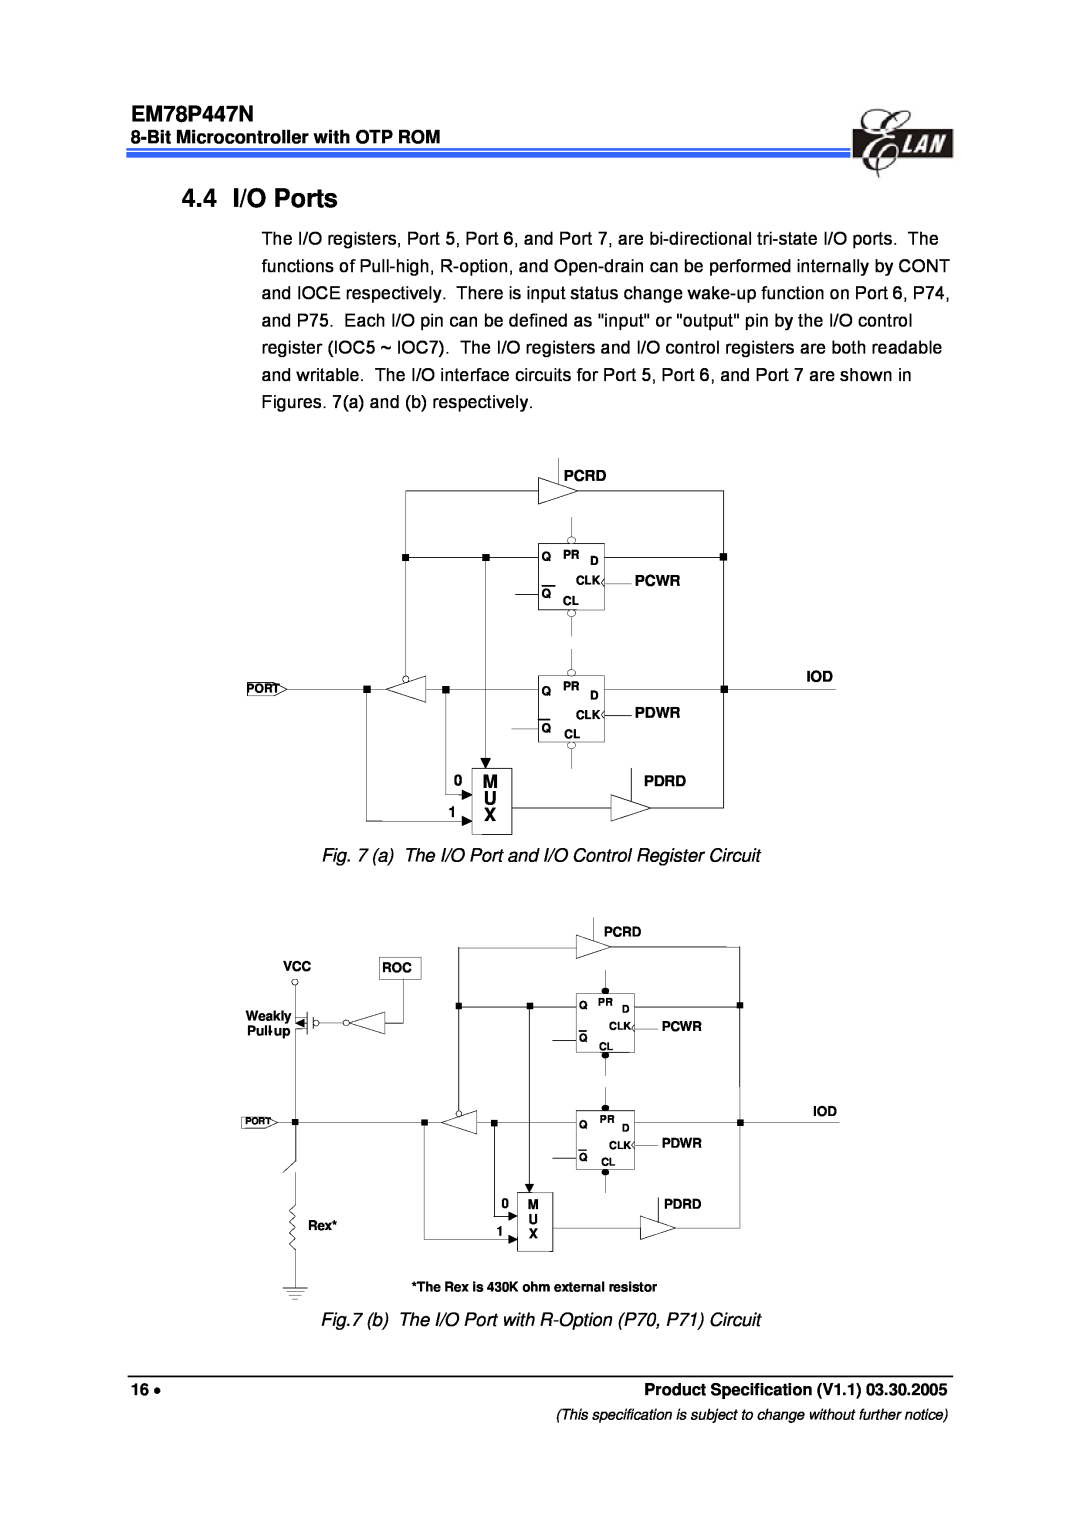 IBM EM78P447N manual 4.4 I/O Ports, a The I/O Port and I/O Control Register Circuit 